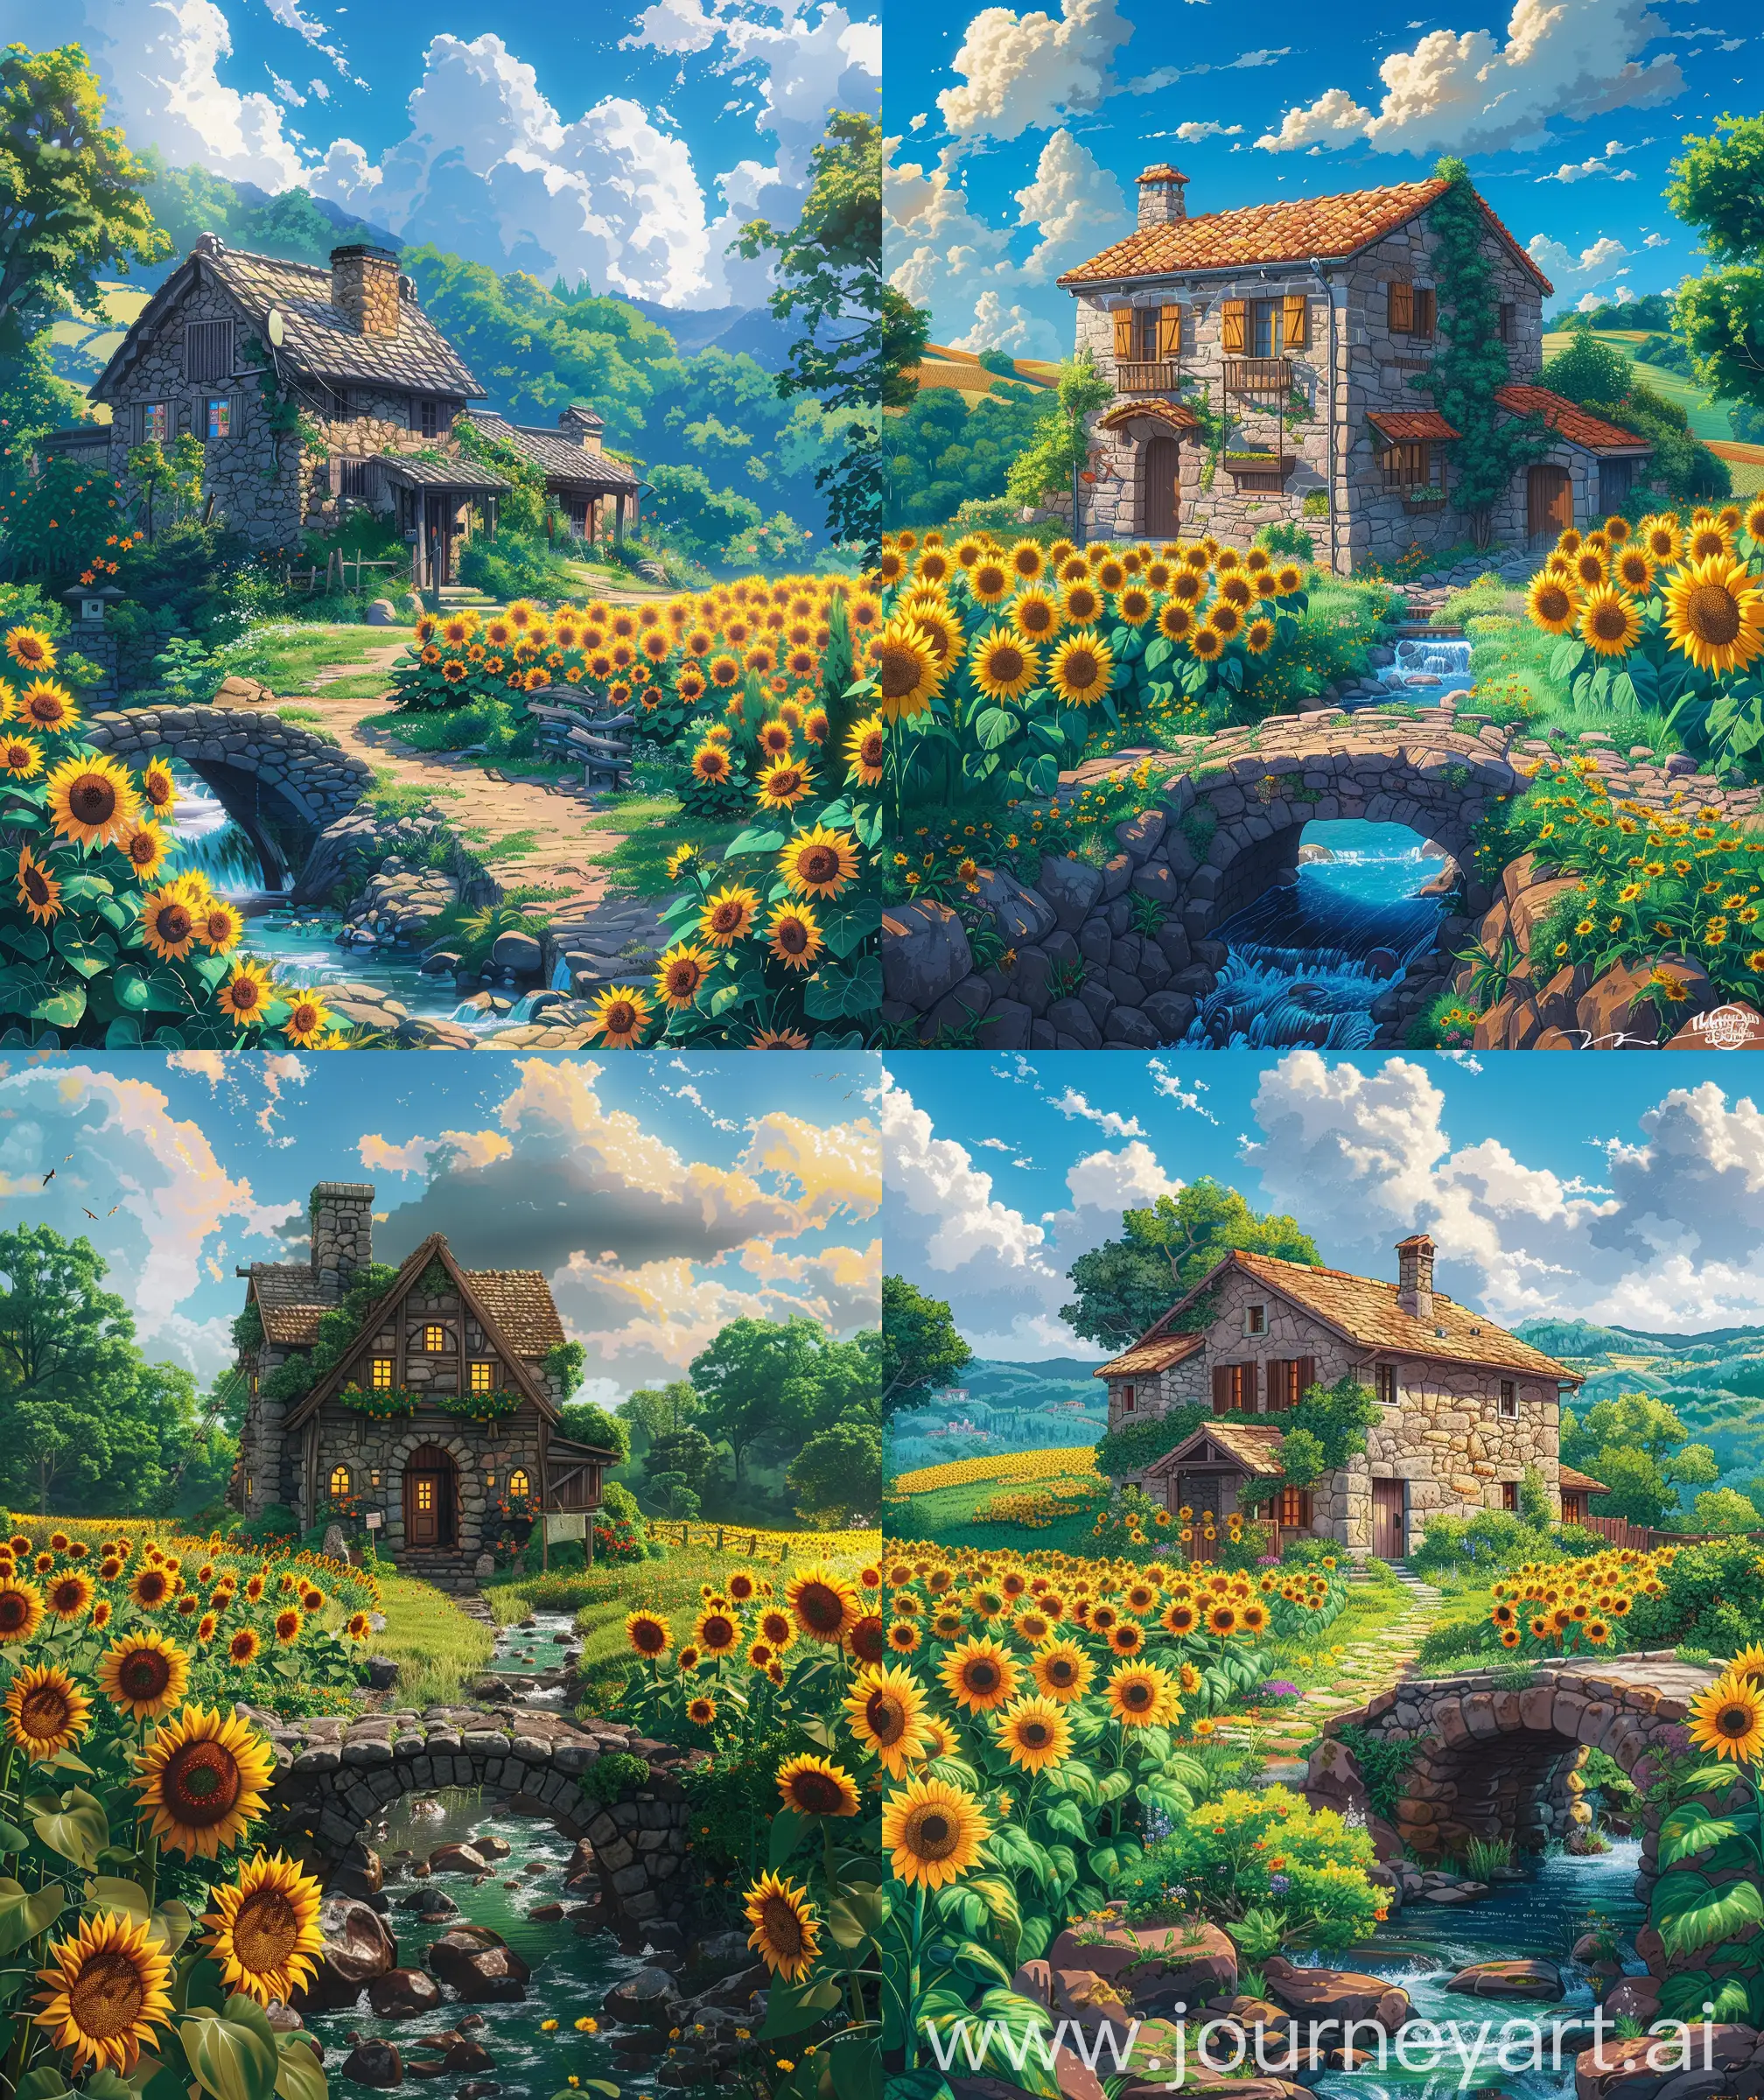 Quaint-Stone-House-in-Sunflower-Field-Anime-Scenery-Illustration